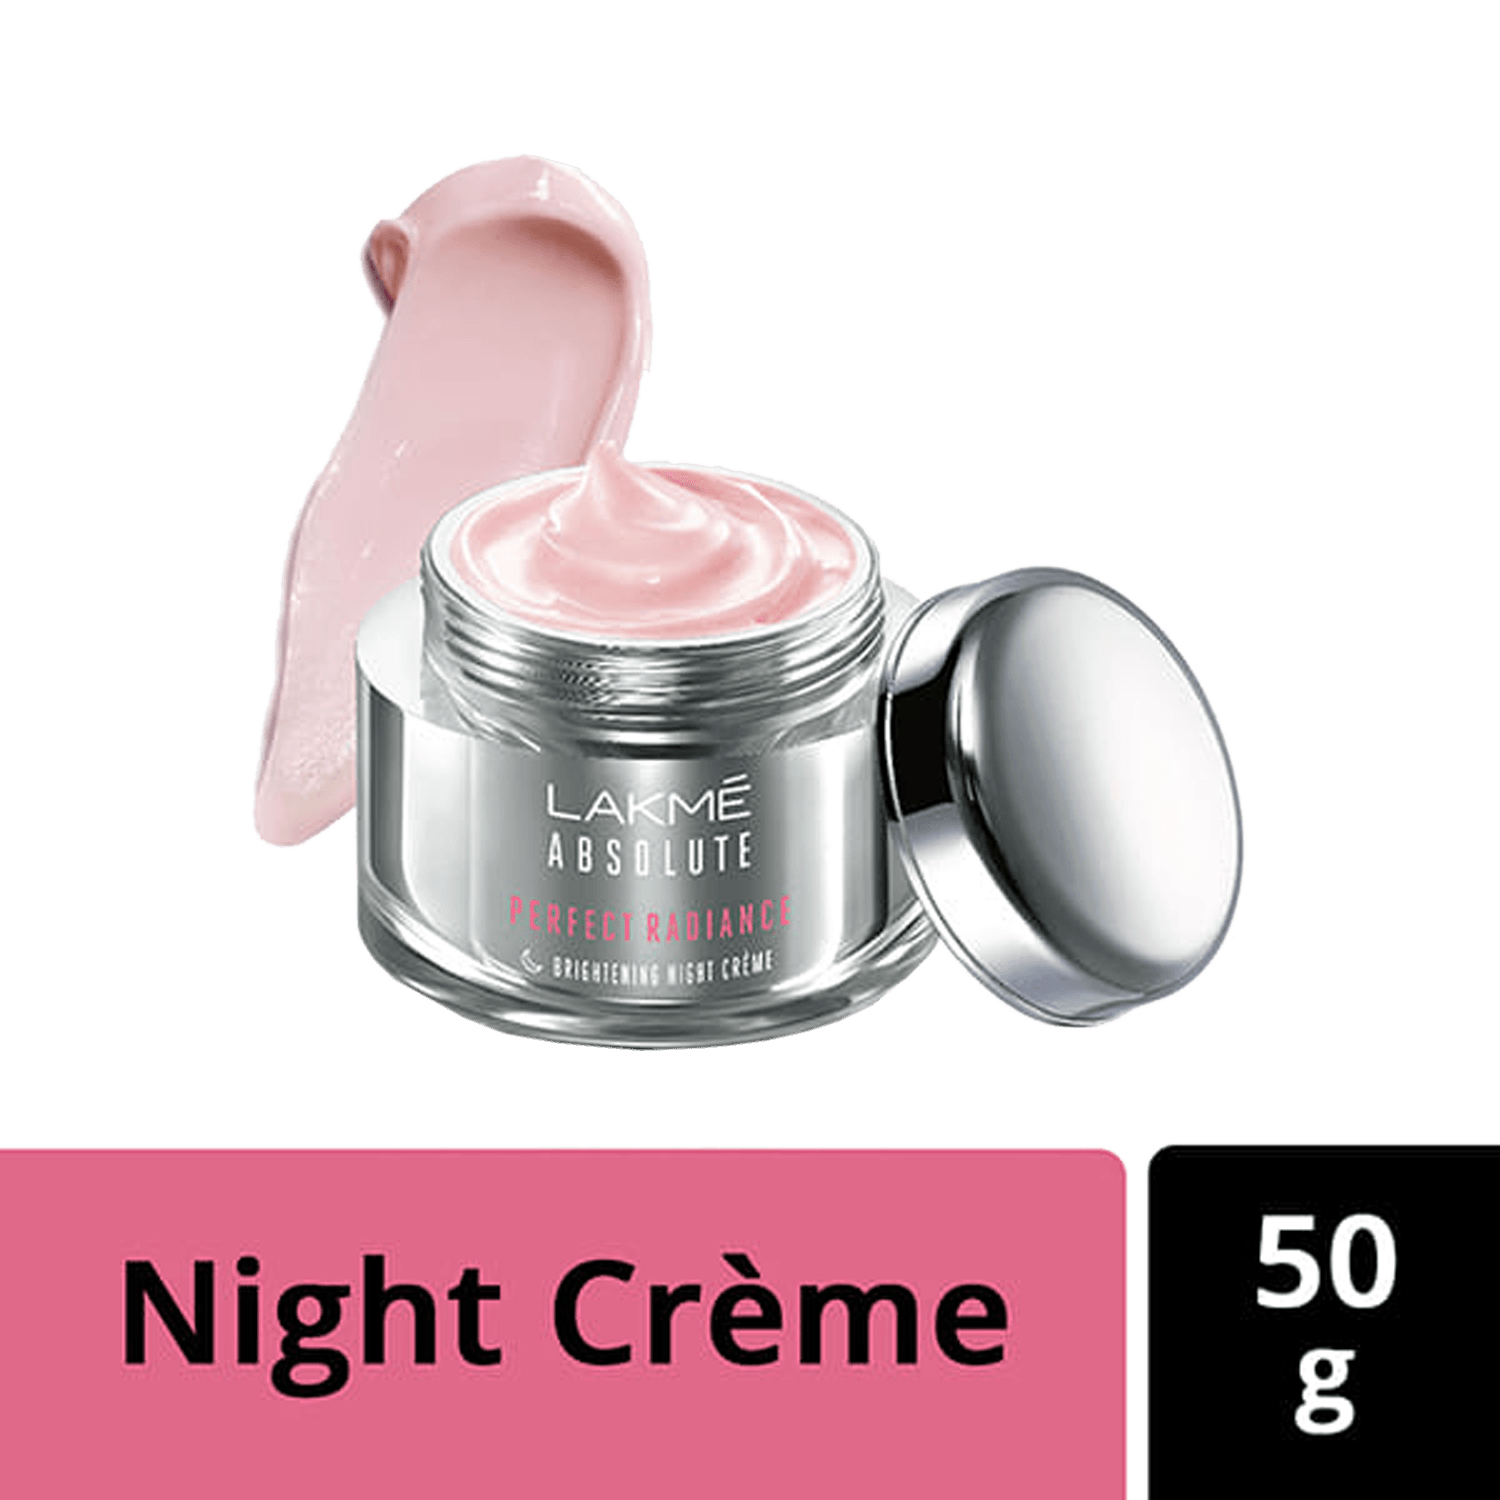 Lakme | Lakme Absolute Perfect Radiance Skin Brightening Night Creme (50g)